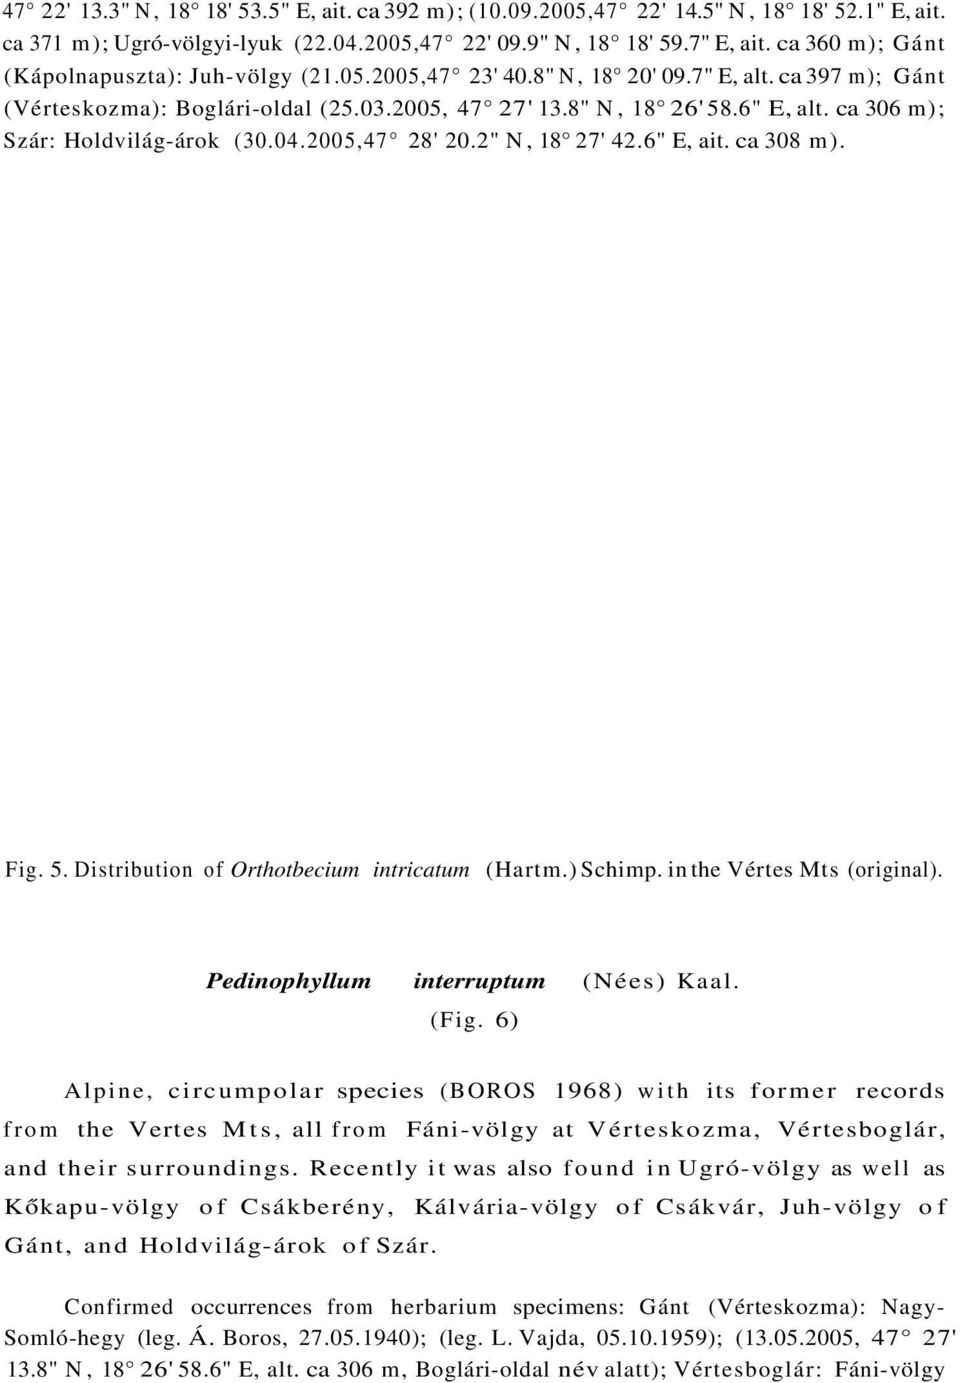 ca 306 m); Szár: Holdvilág-árok (30.04.2005,47 28' 20.2" N, 18 27' 42.6" E, ait. ca 308 m). Fig. 5. Distribution of Orthotbecium intricatum (Hartm.) Schimp. in the Vértes Mts (original).